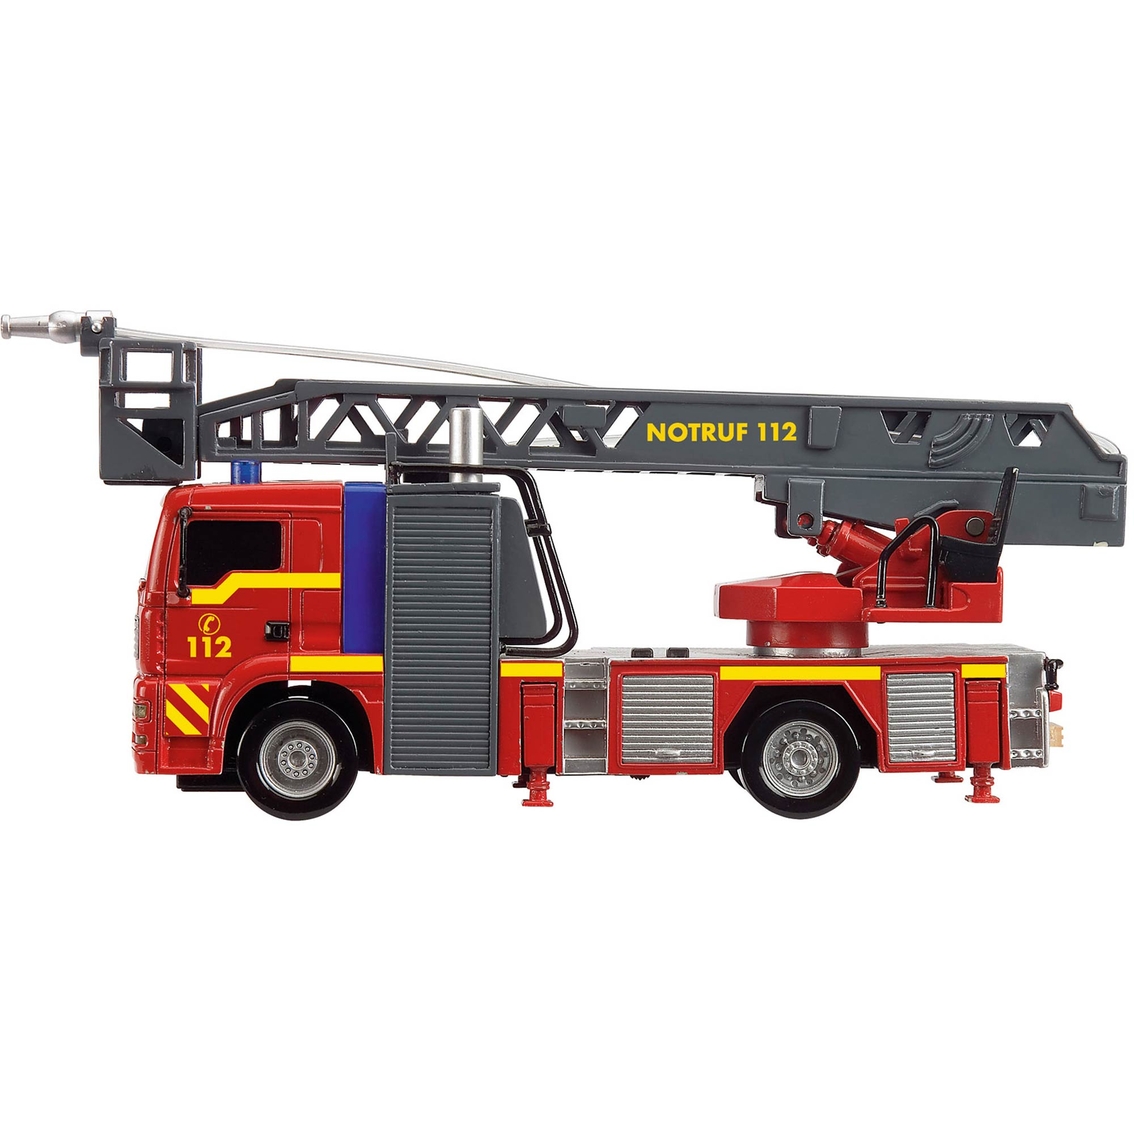 Giallo/Bianco Camion dei Pompieri City Fire Engine Dickie  -Spielzeug 203715001 Colore